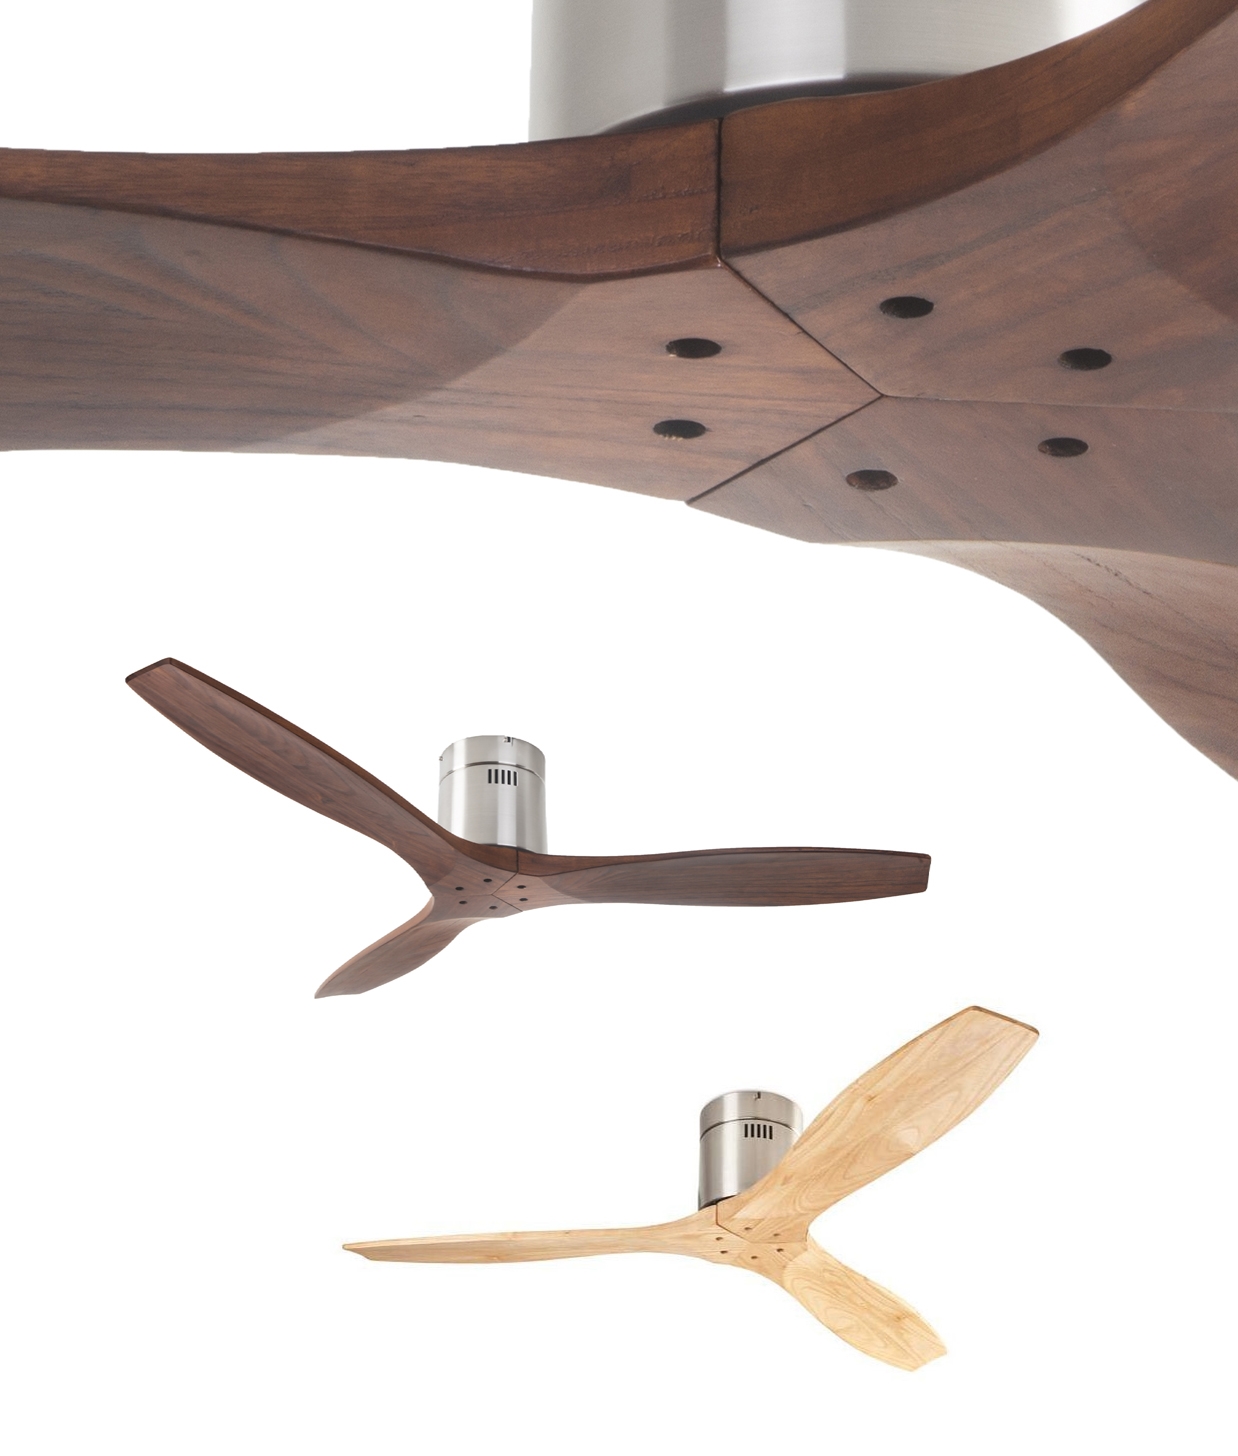 Wooden Propeller Style Blade Ceiling, Wooden Airplane Propeller Ceiling Fan